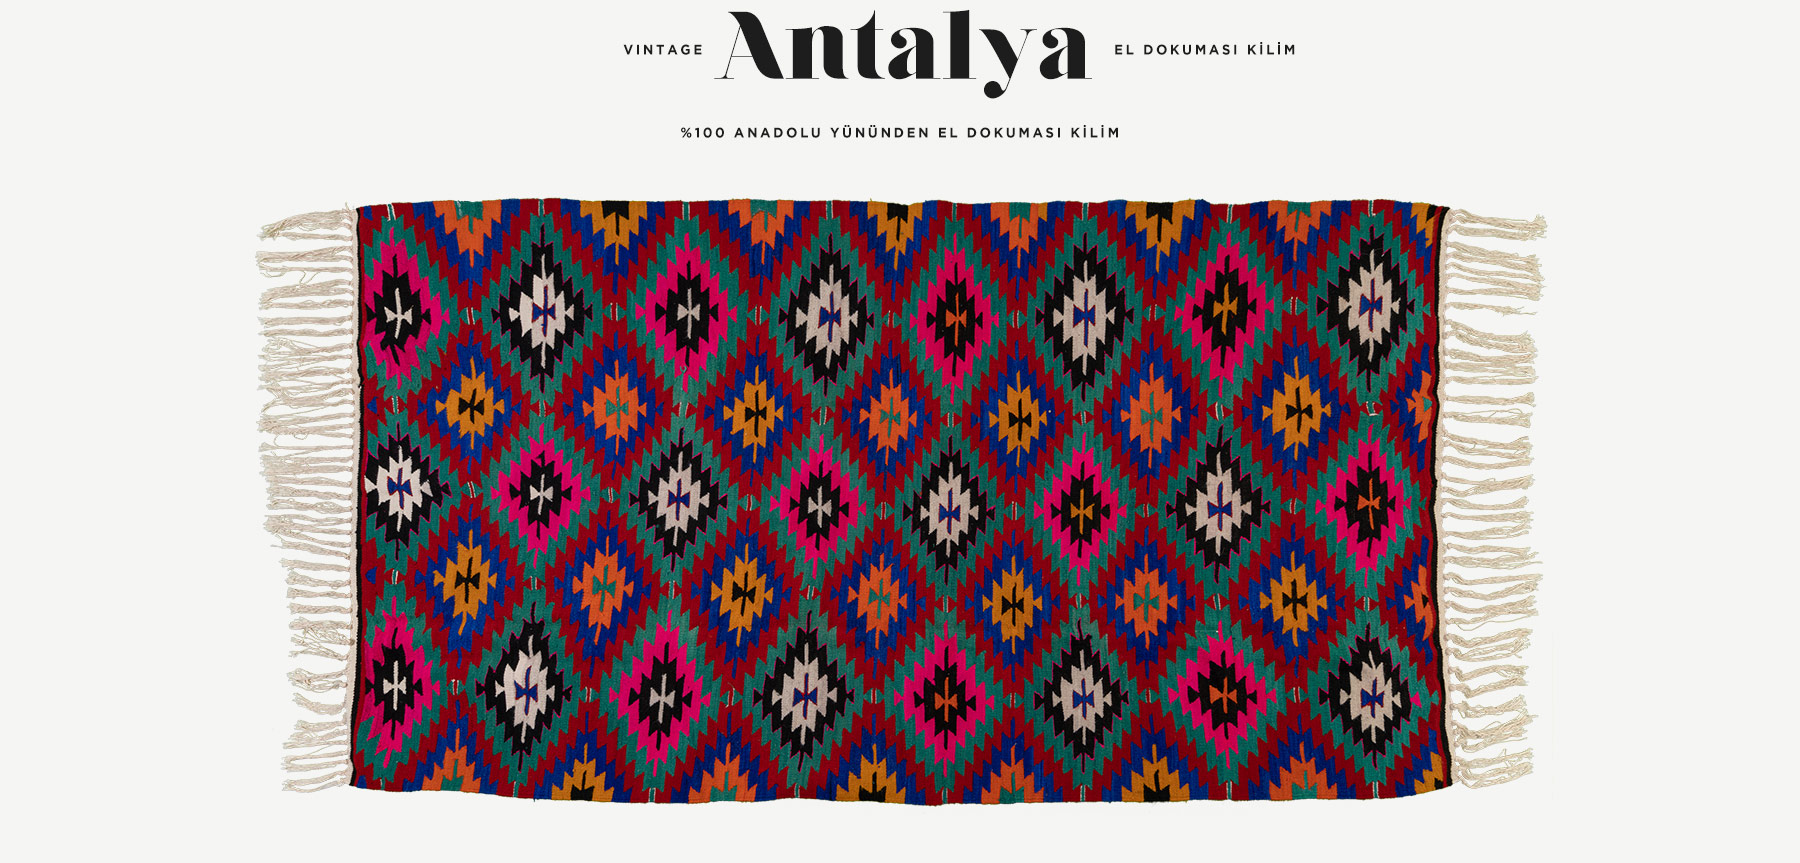 Vintage Antalya El Dokuması Kilim 5,21 m2'in resmi